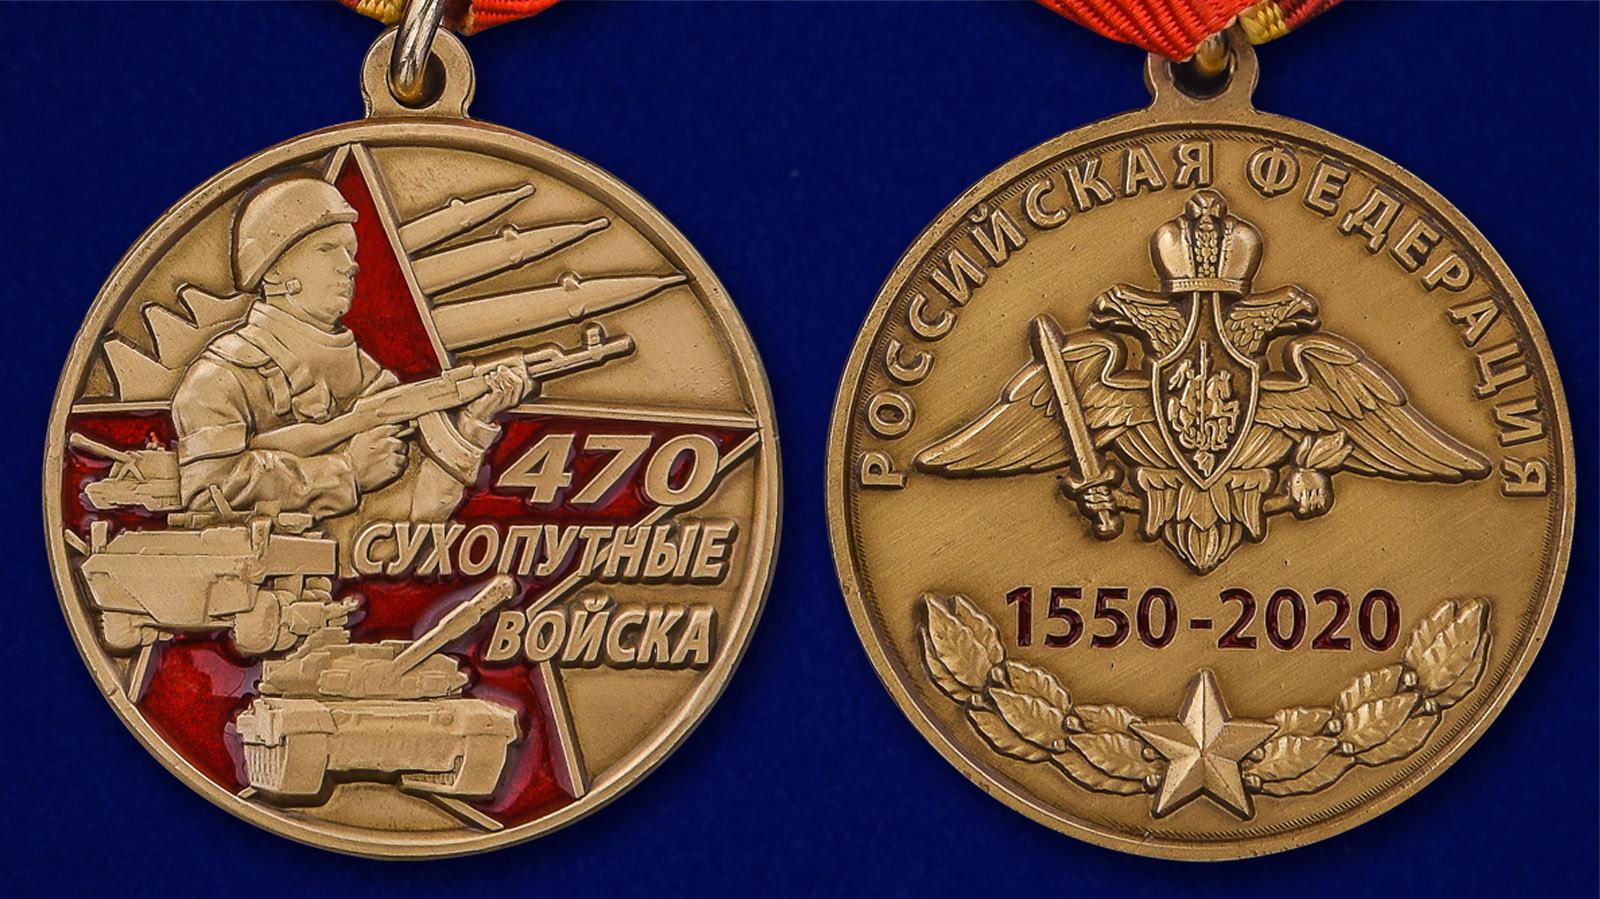 Памятная медаль "470 лет Сухопутным войскам" 